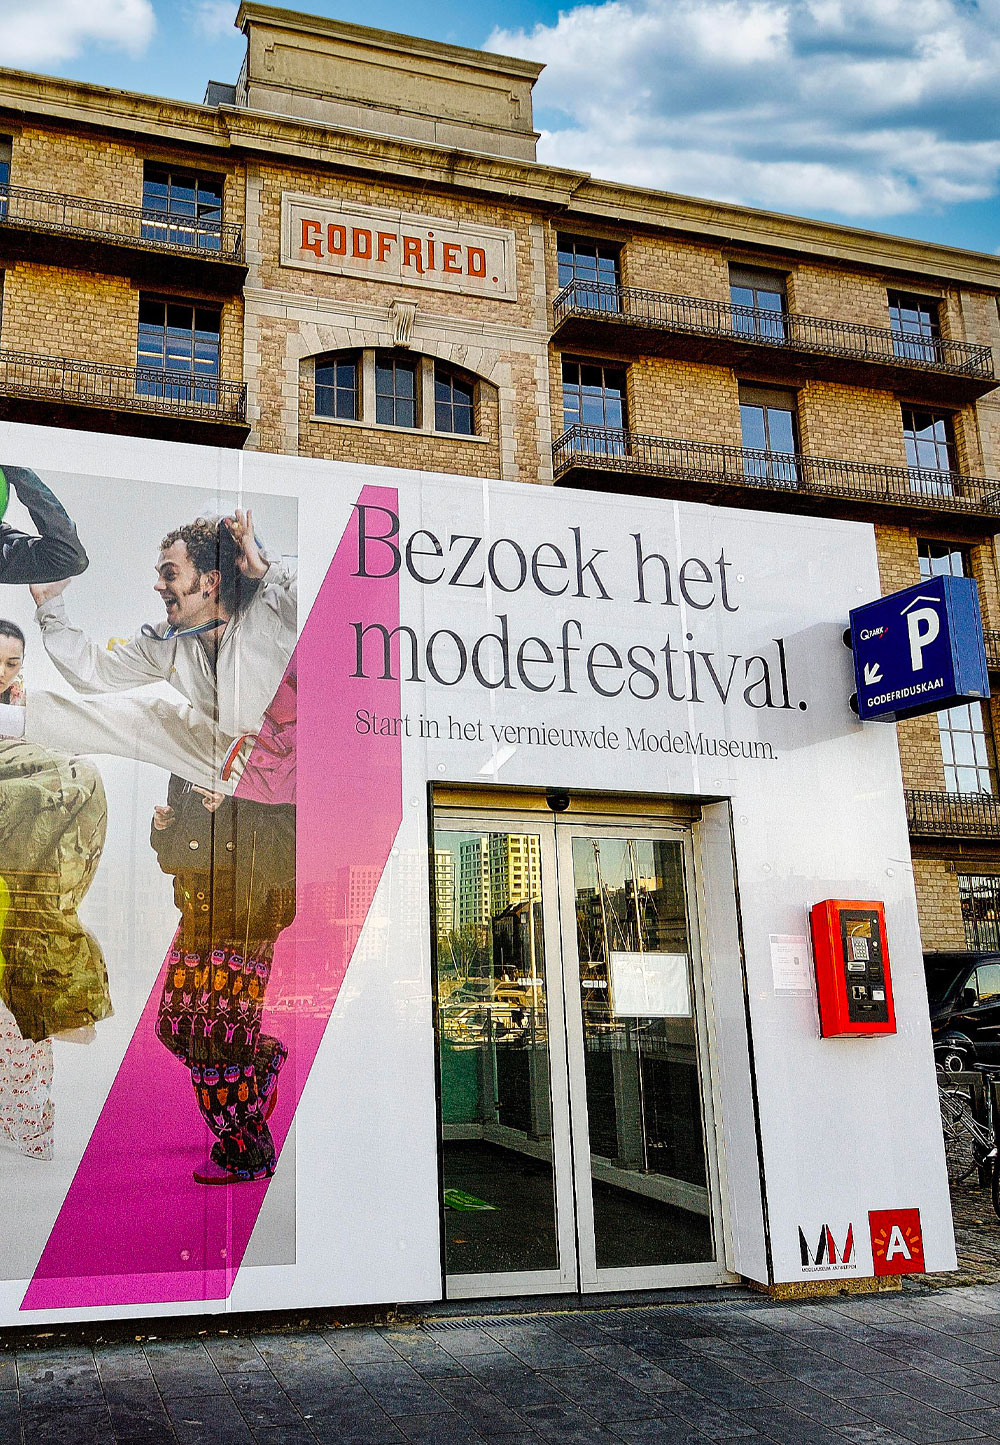 Antwerp's Fashion Capital of the World